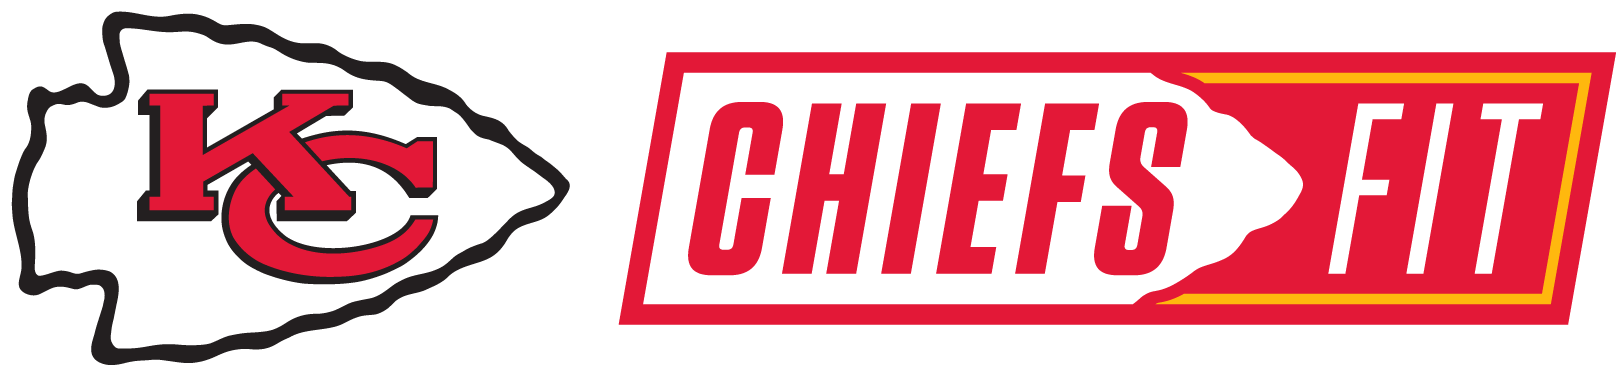 Chiefs Fit Logo